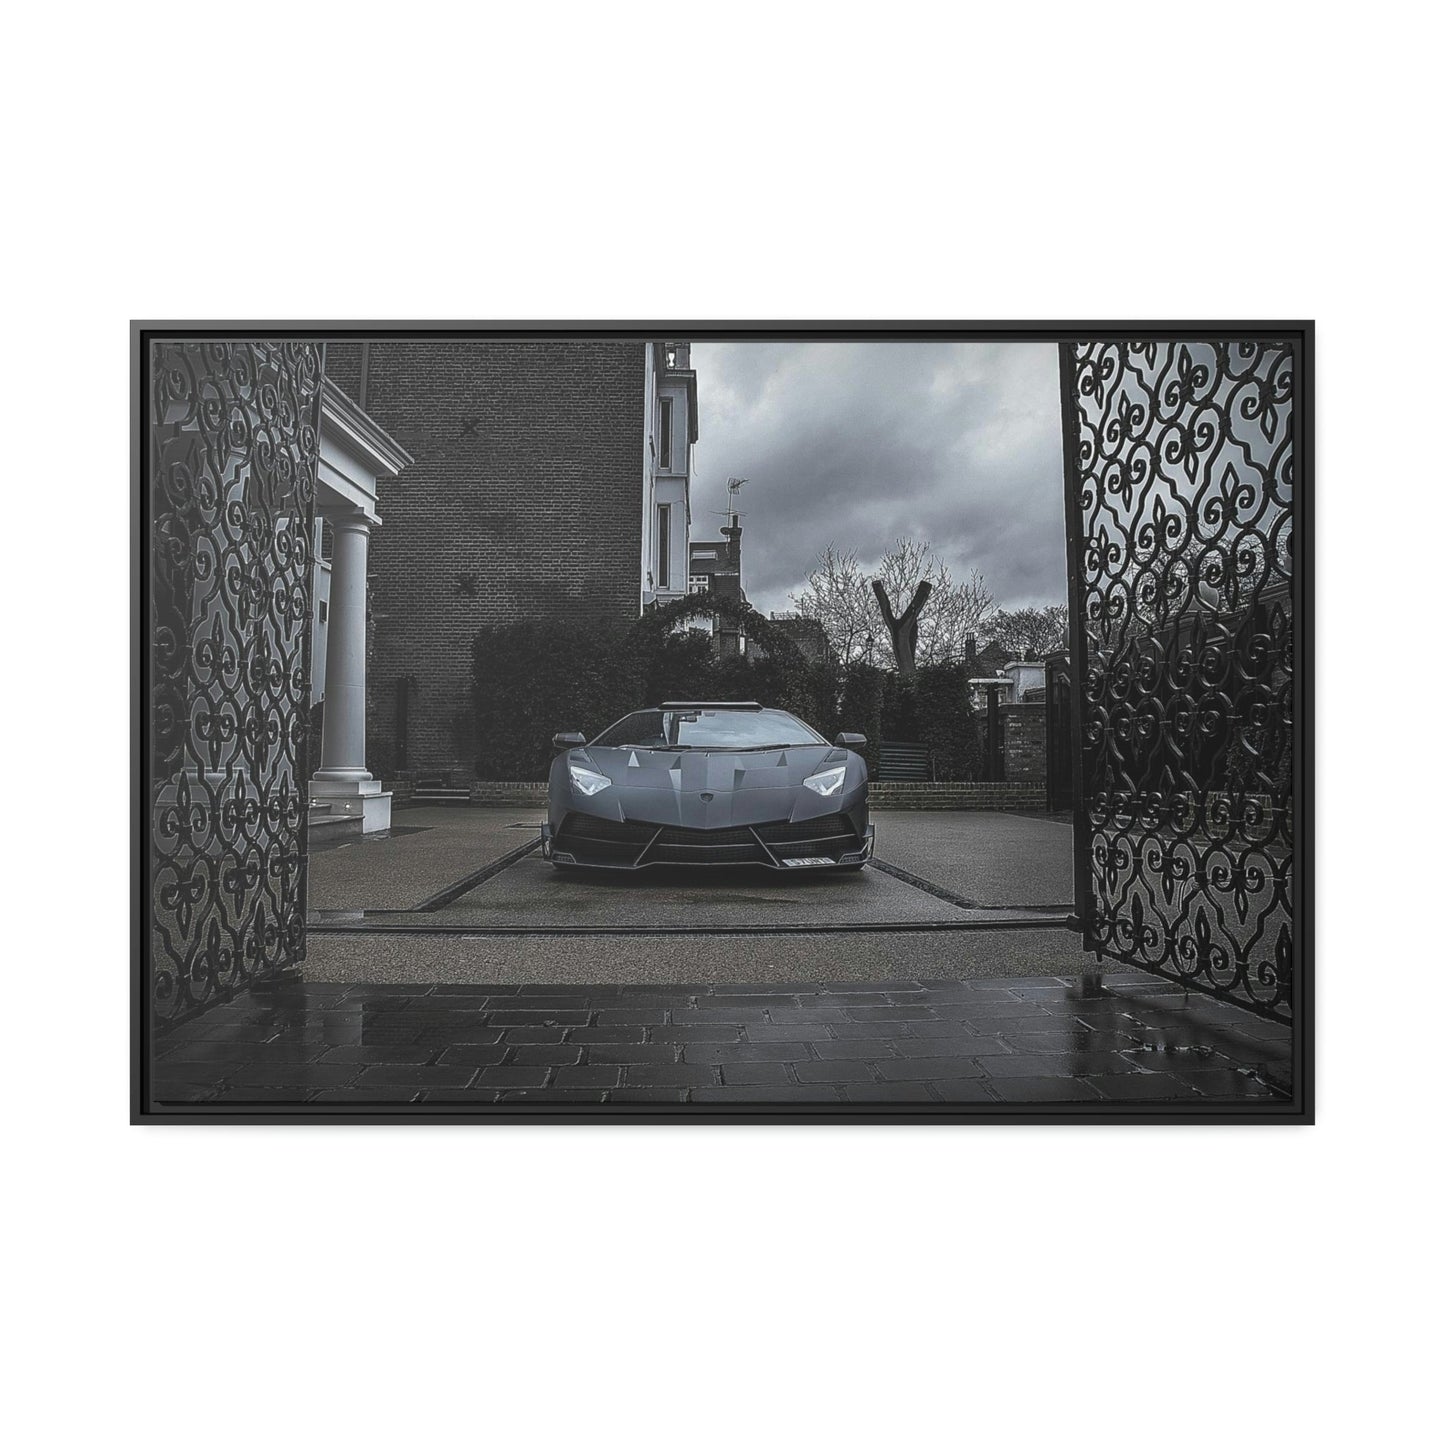 Speed Demon on Canvas & Poster: Captivating Artwork of Lamborghini